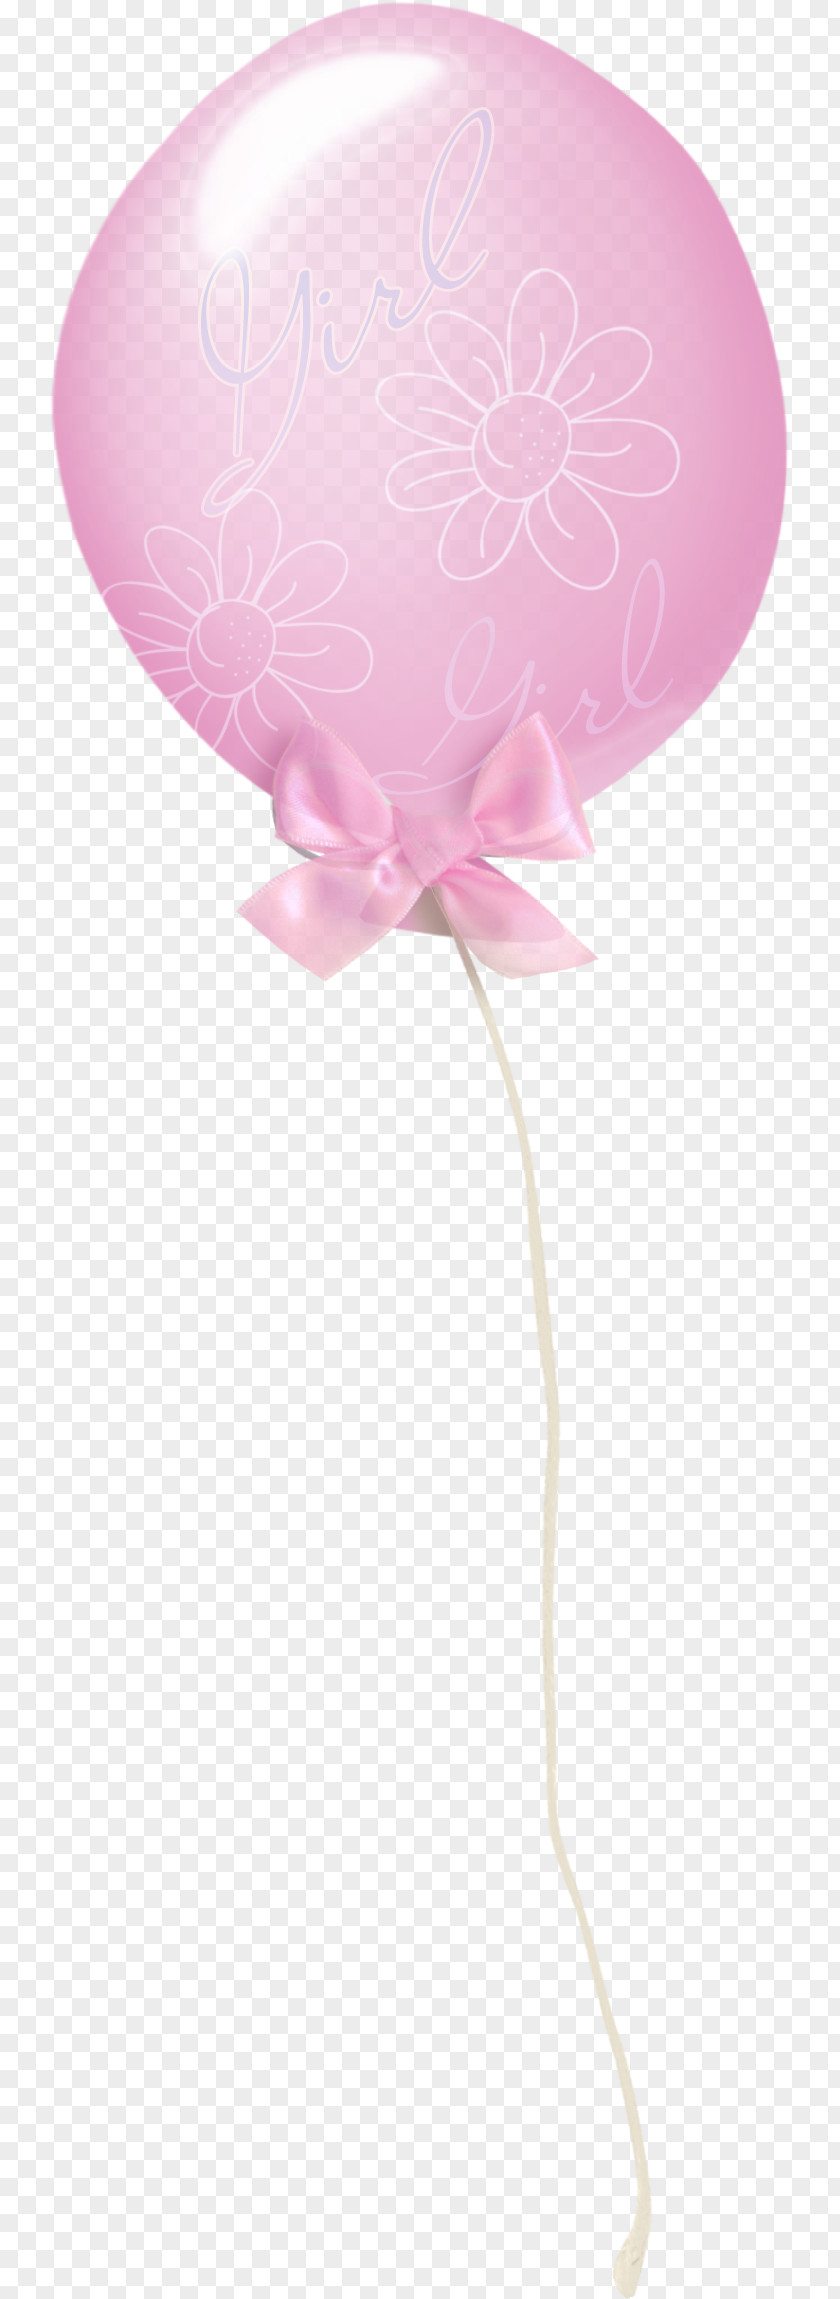 Design Balloon Flowering Plant PNG